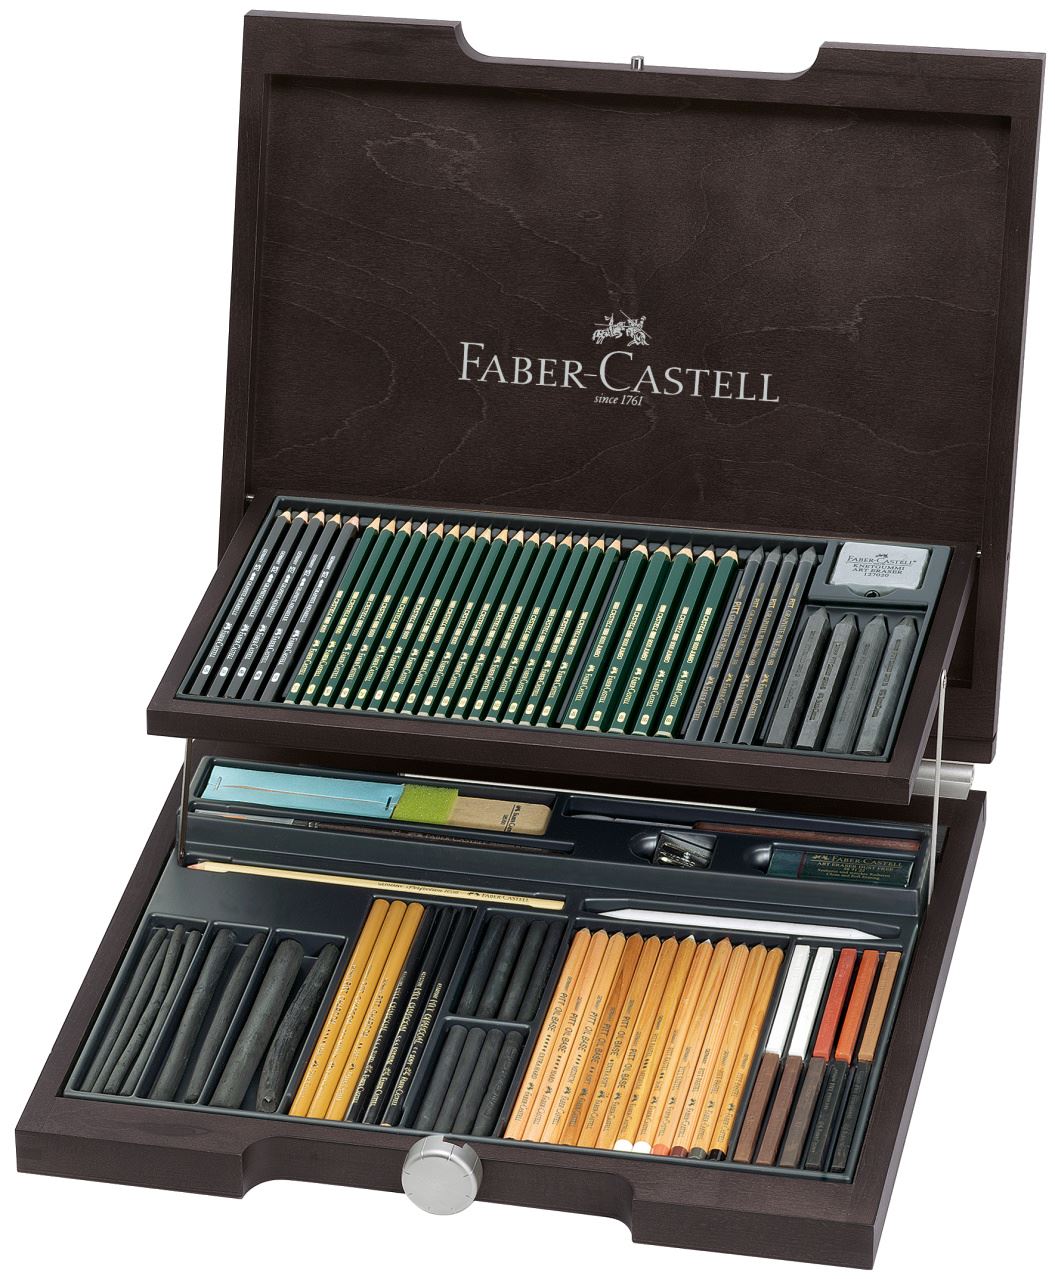 Faber-Castell - Pitt Monochrome wooden case, 85 pieces